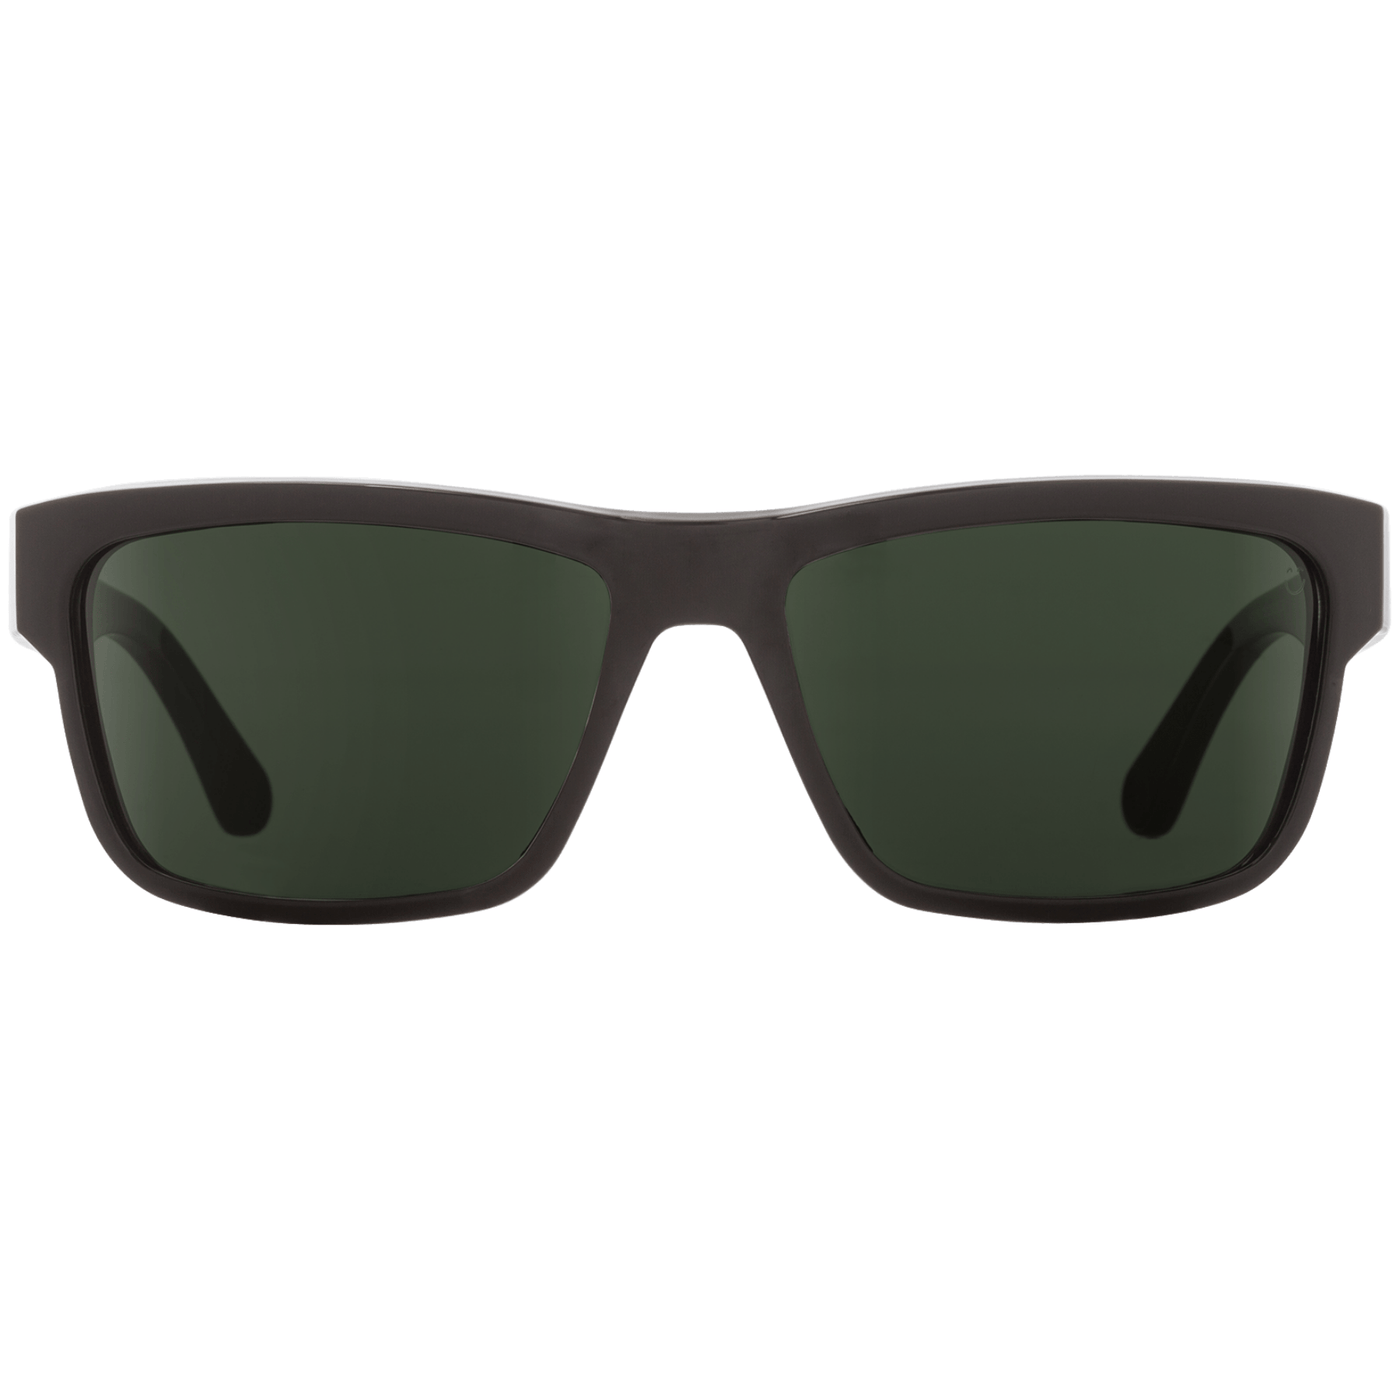 SPY FRAZIER Sunglasses - Black Frame 8Lines Shop - Fast Shipping